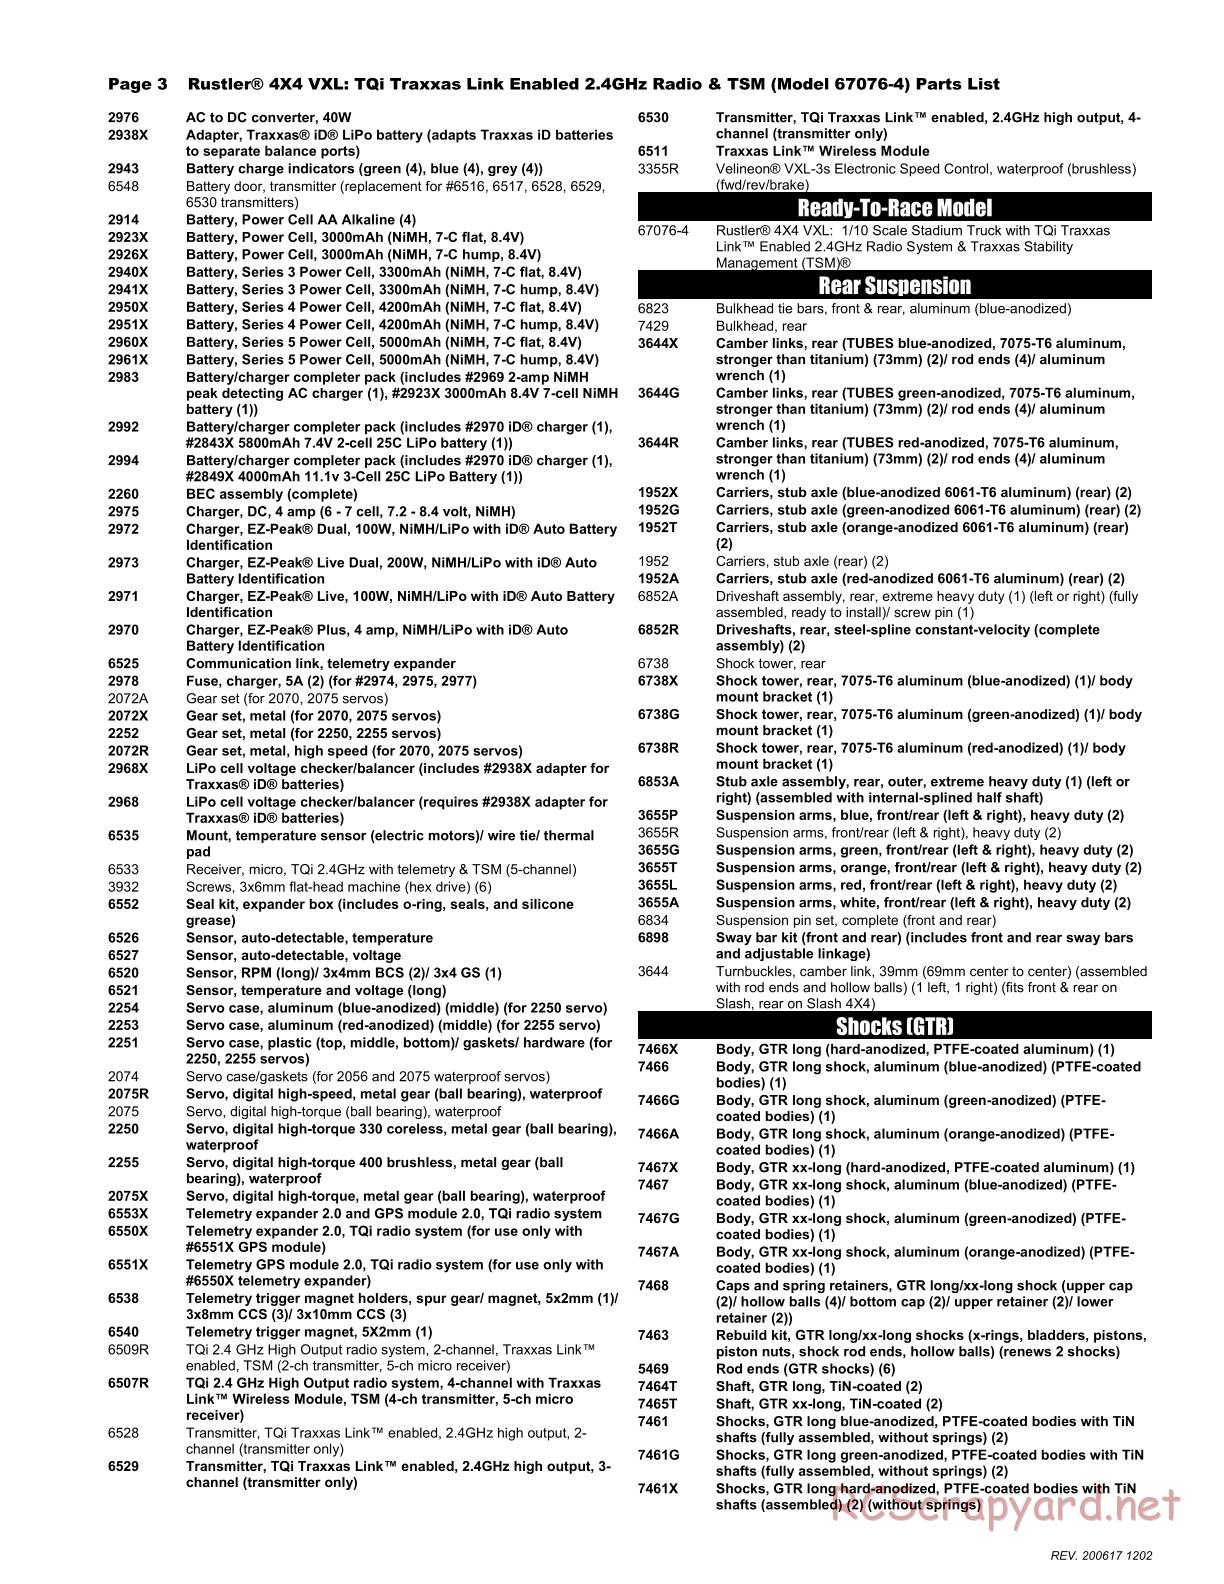 Traxxas - Rustler 4x4 VXL - Parts List - Page 3